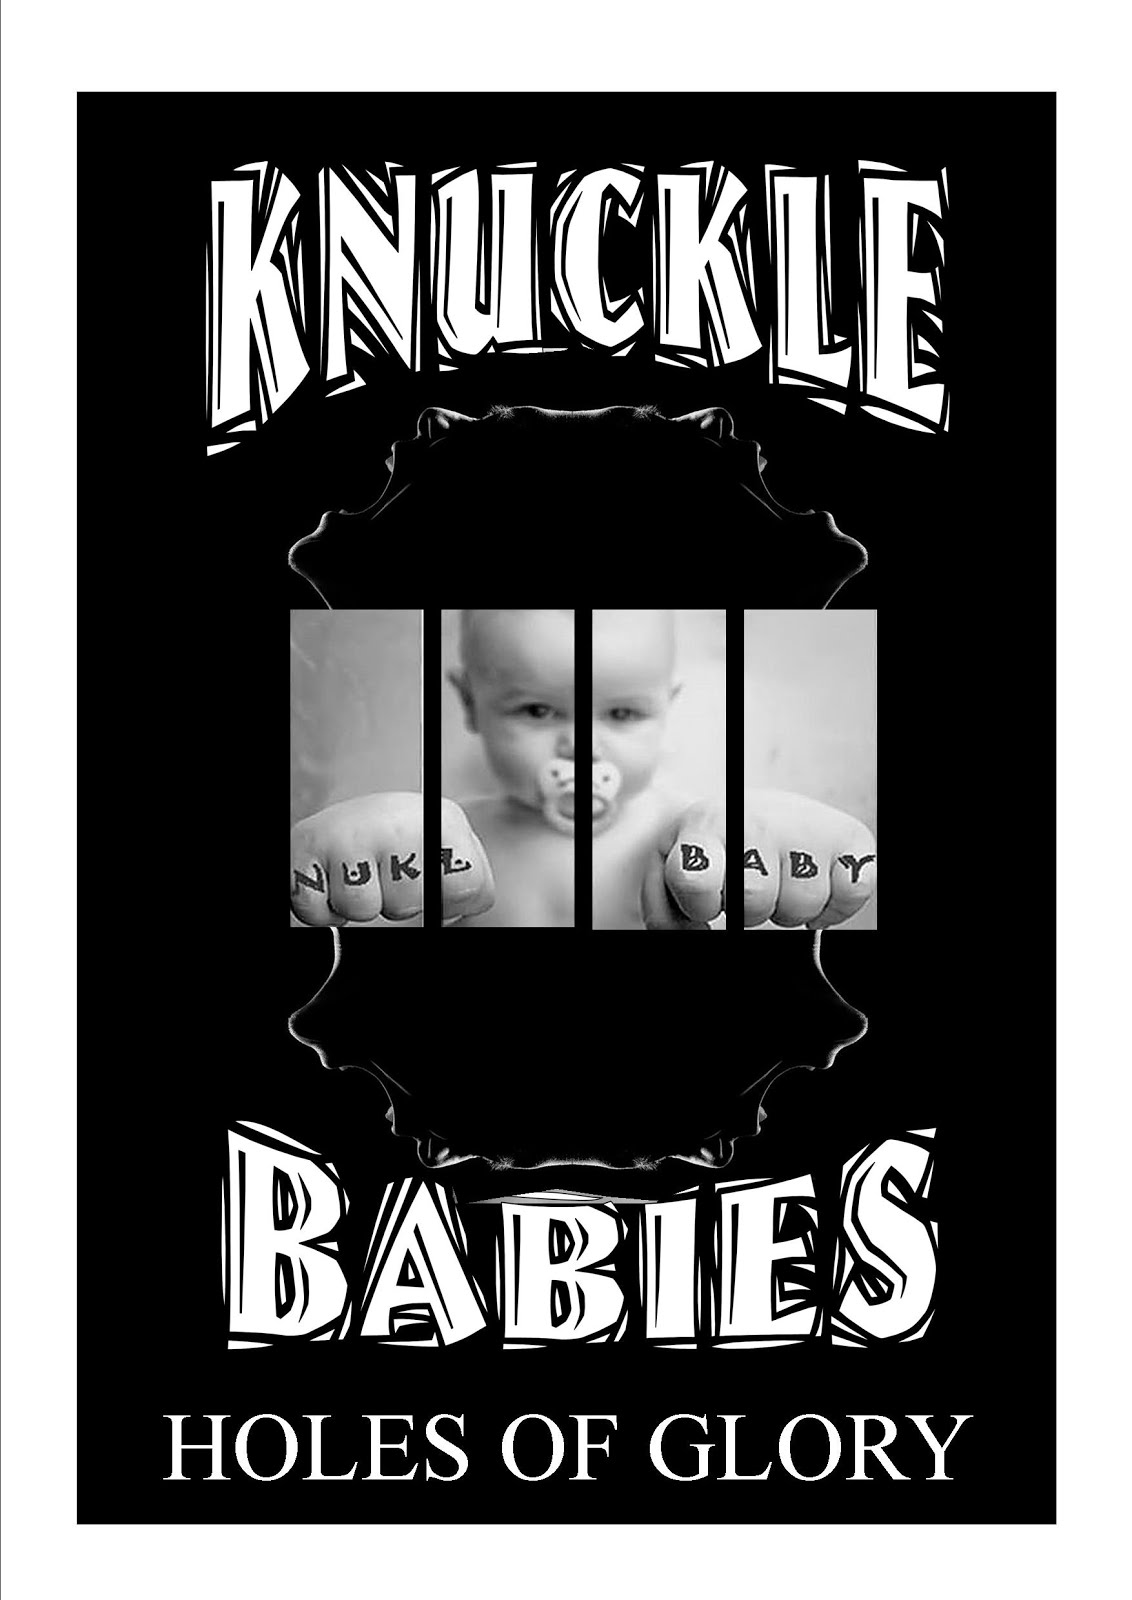 Knuckle Babies